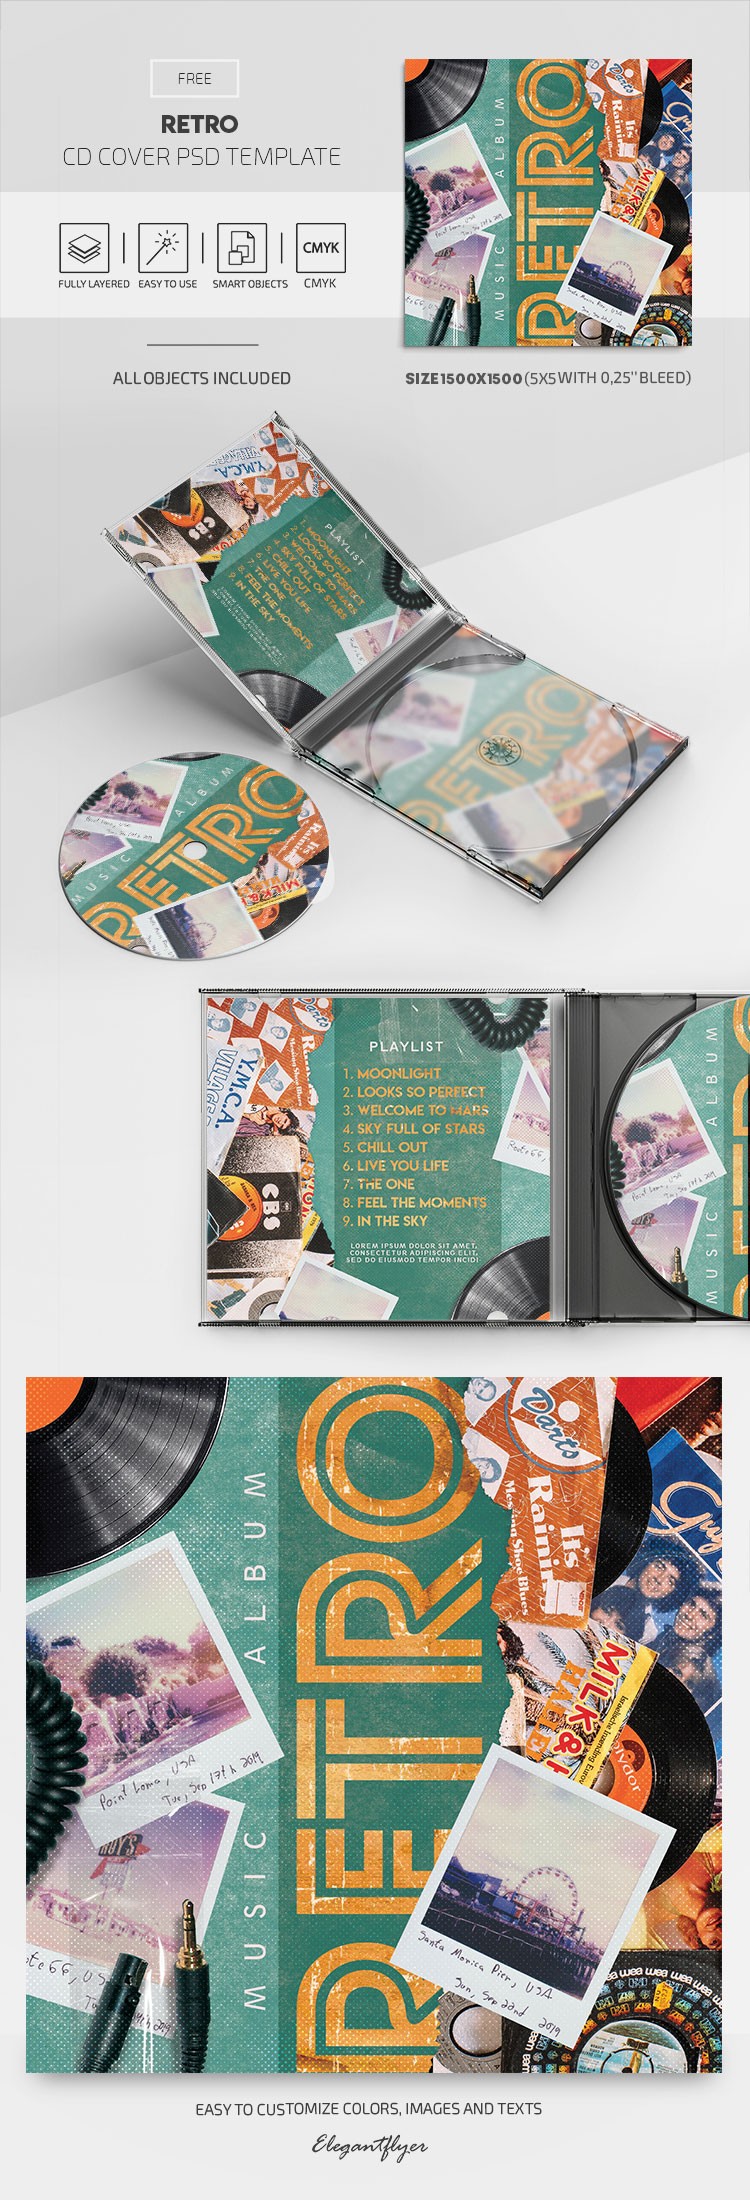 Capa de CD Retrô by ElegantFlyer